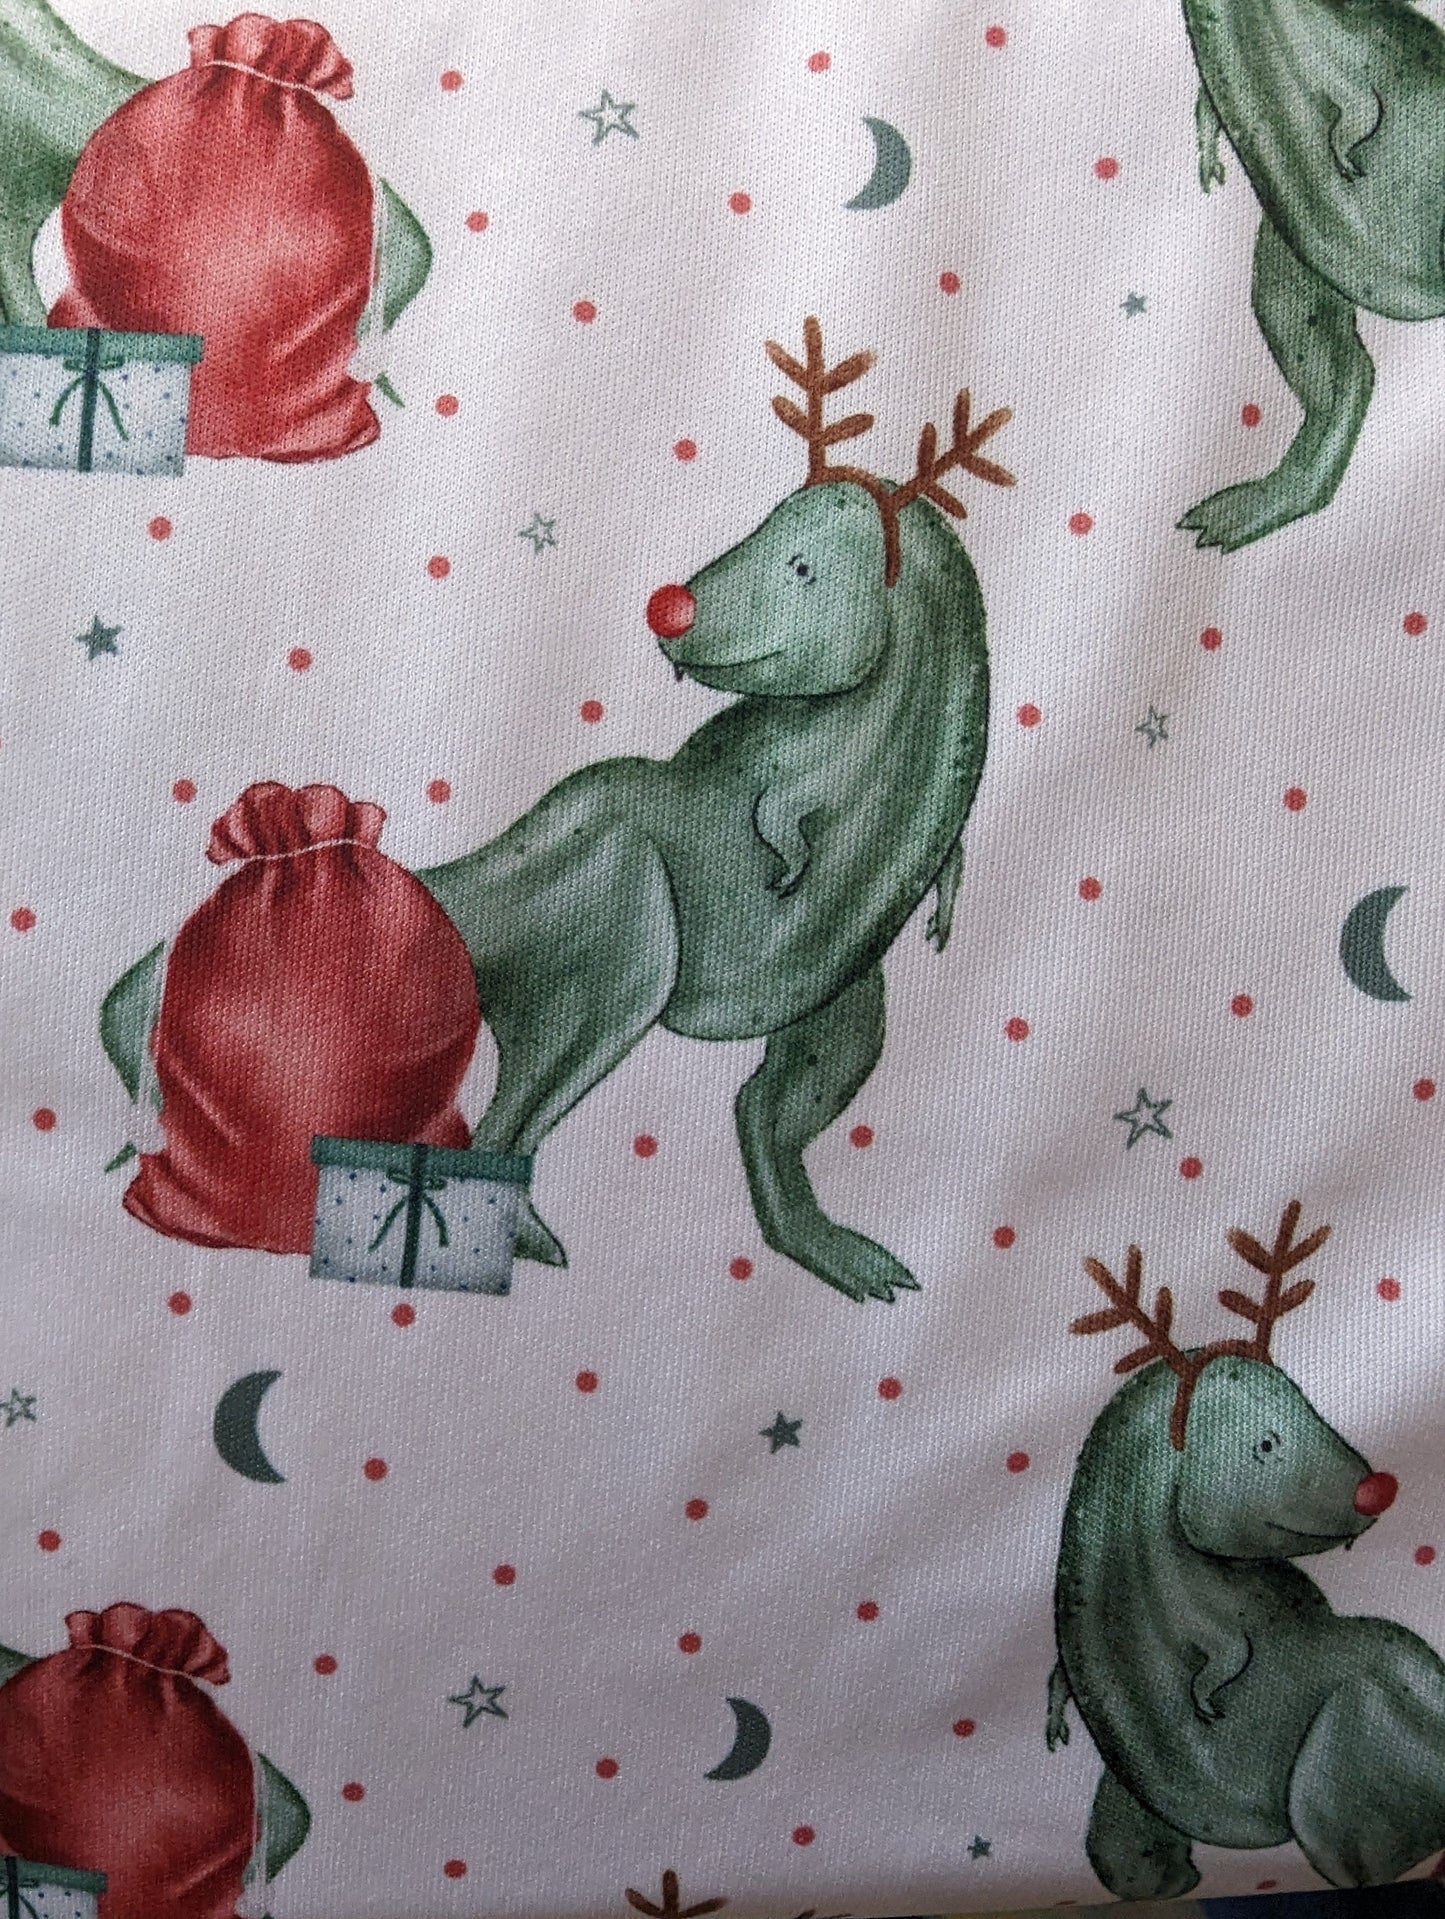 Rudolph Dinosaur Christmas Stocking Wetbag